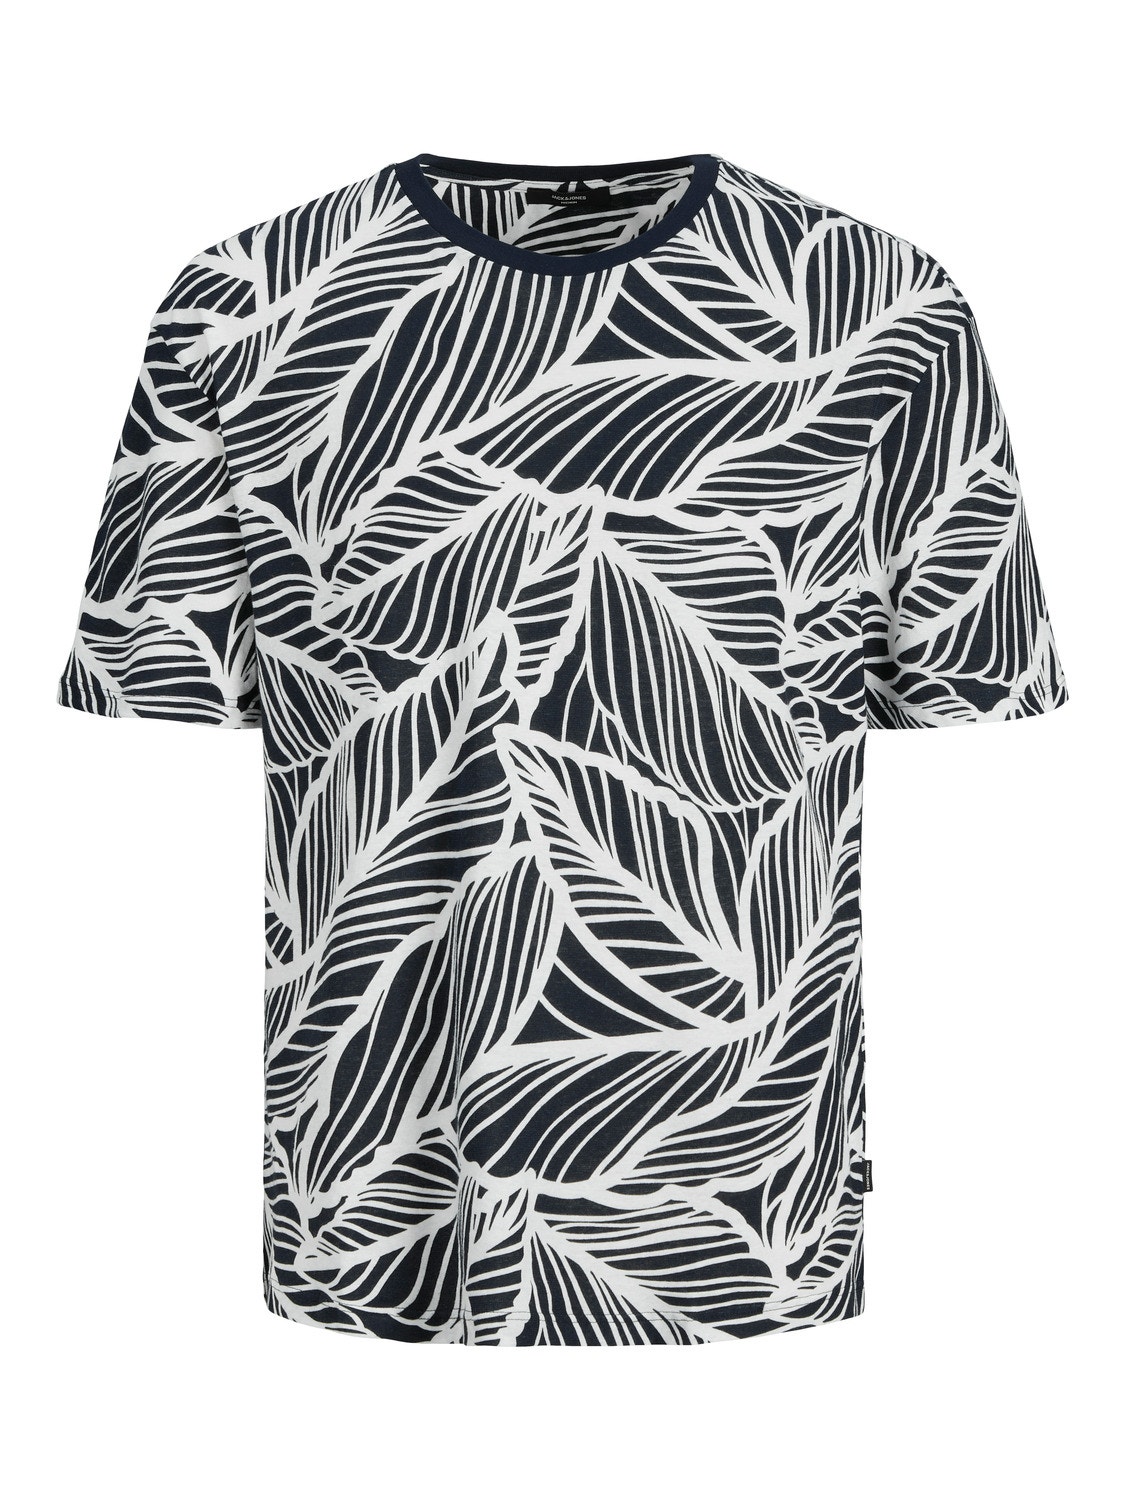 Jack & Jones All Over Print Rundhals T-shirt -Navy Blazer - 12235972